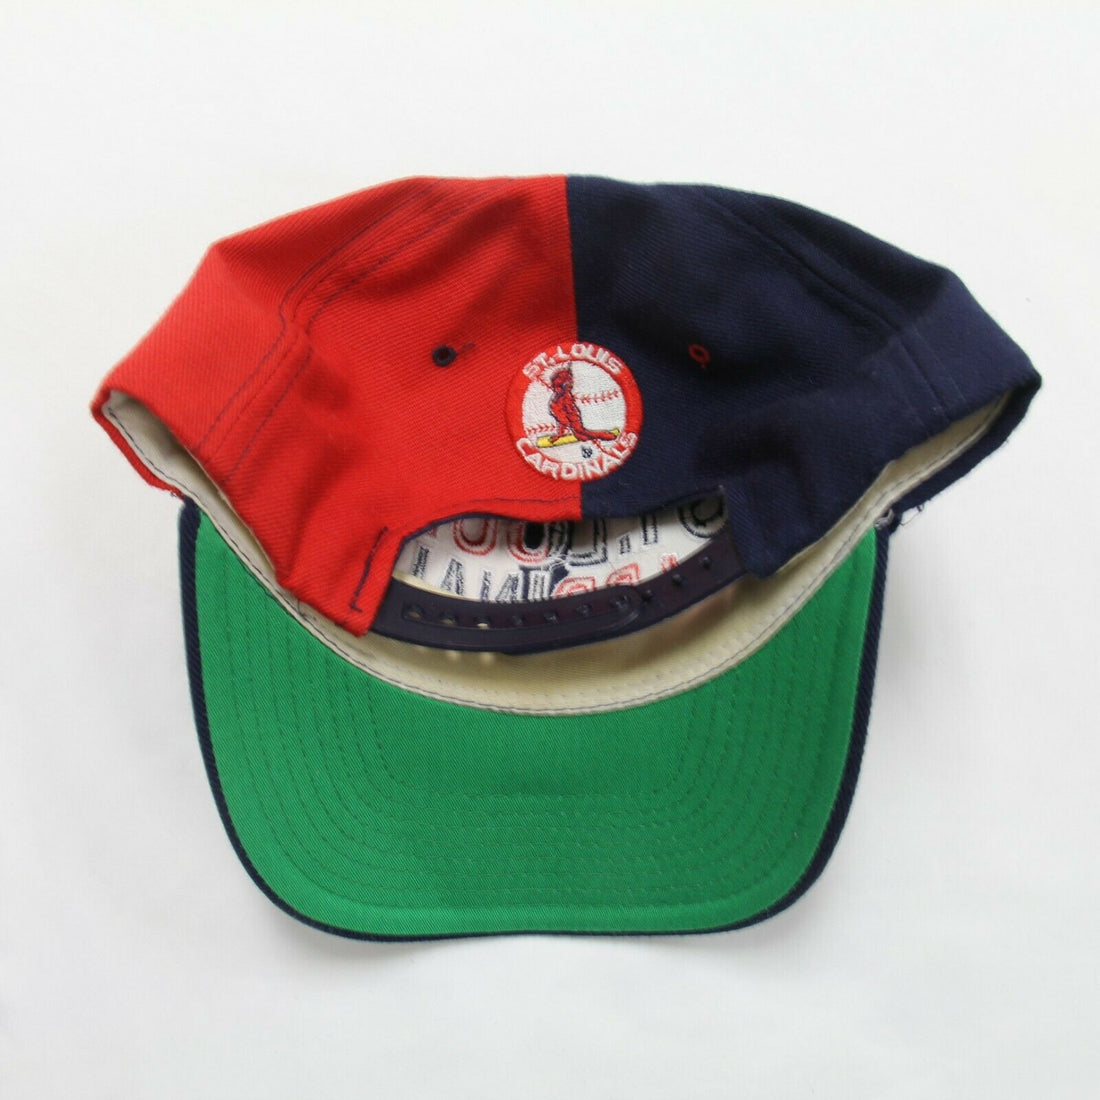 Vintage St Louis Cardinals Annco Snapback Hat Cap OSFA 90s MLB